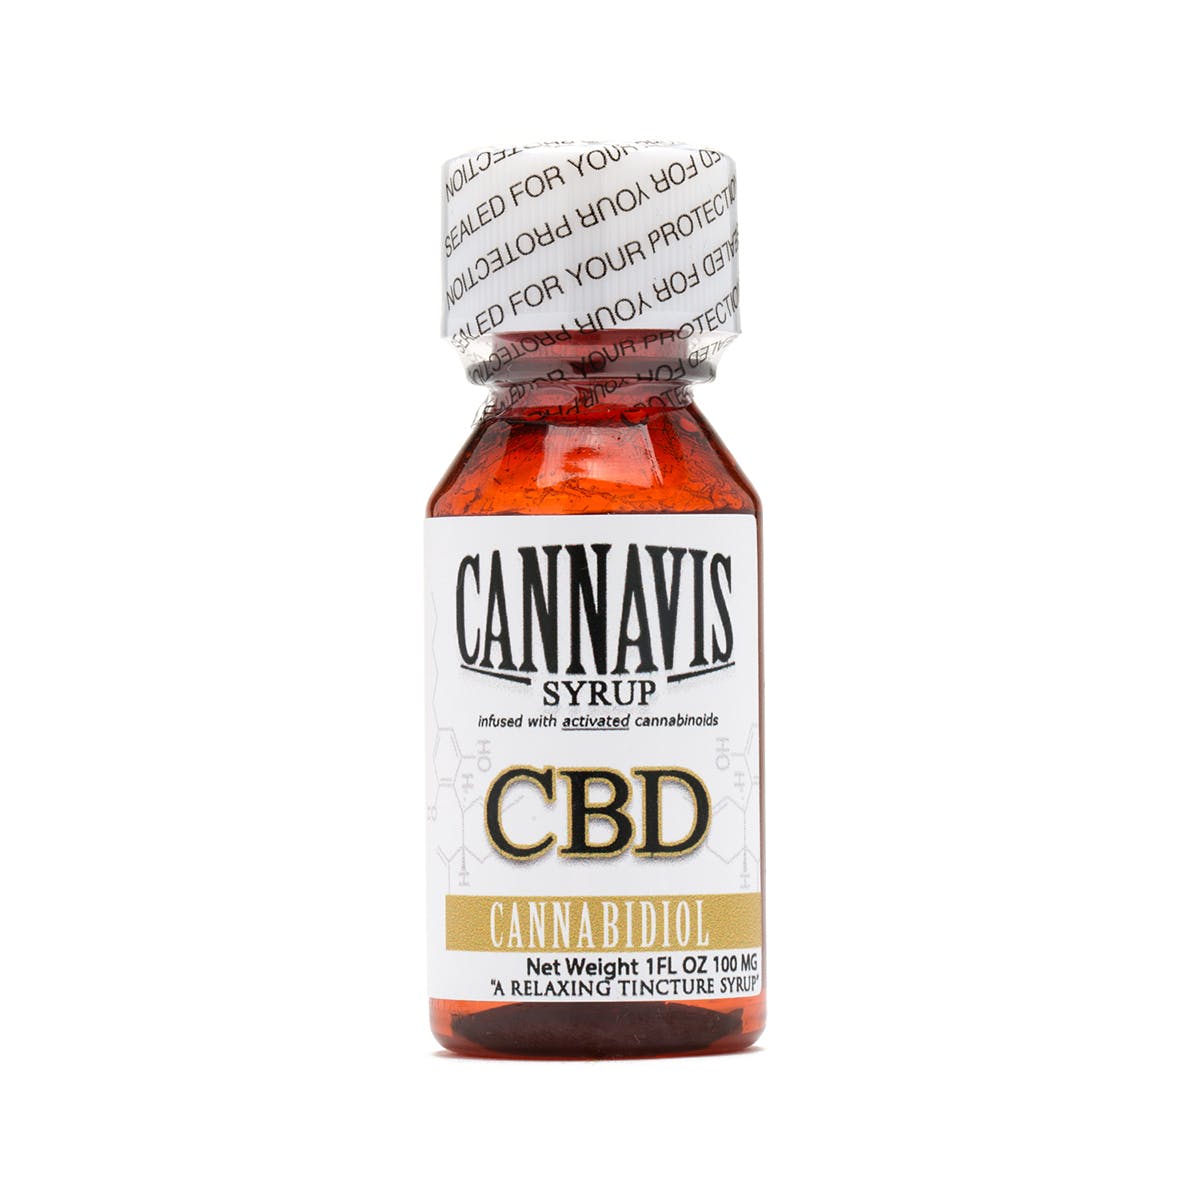 marijuana-dispensaries-organic-solutions-whittier-in-whittier-cannavis-syrup-2c-cbd-100mg